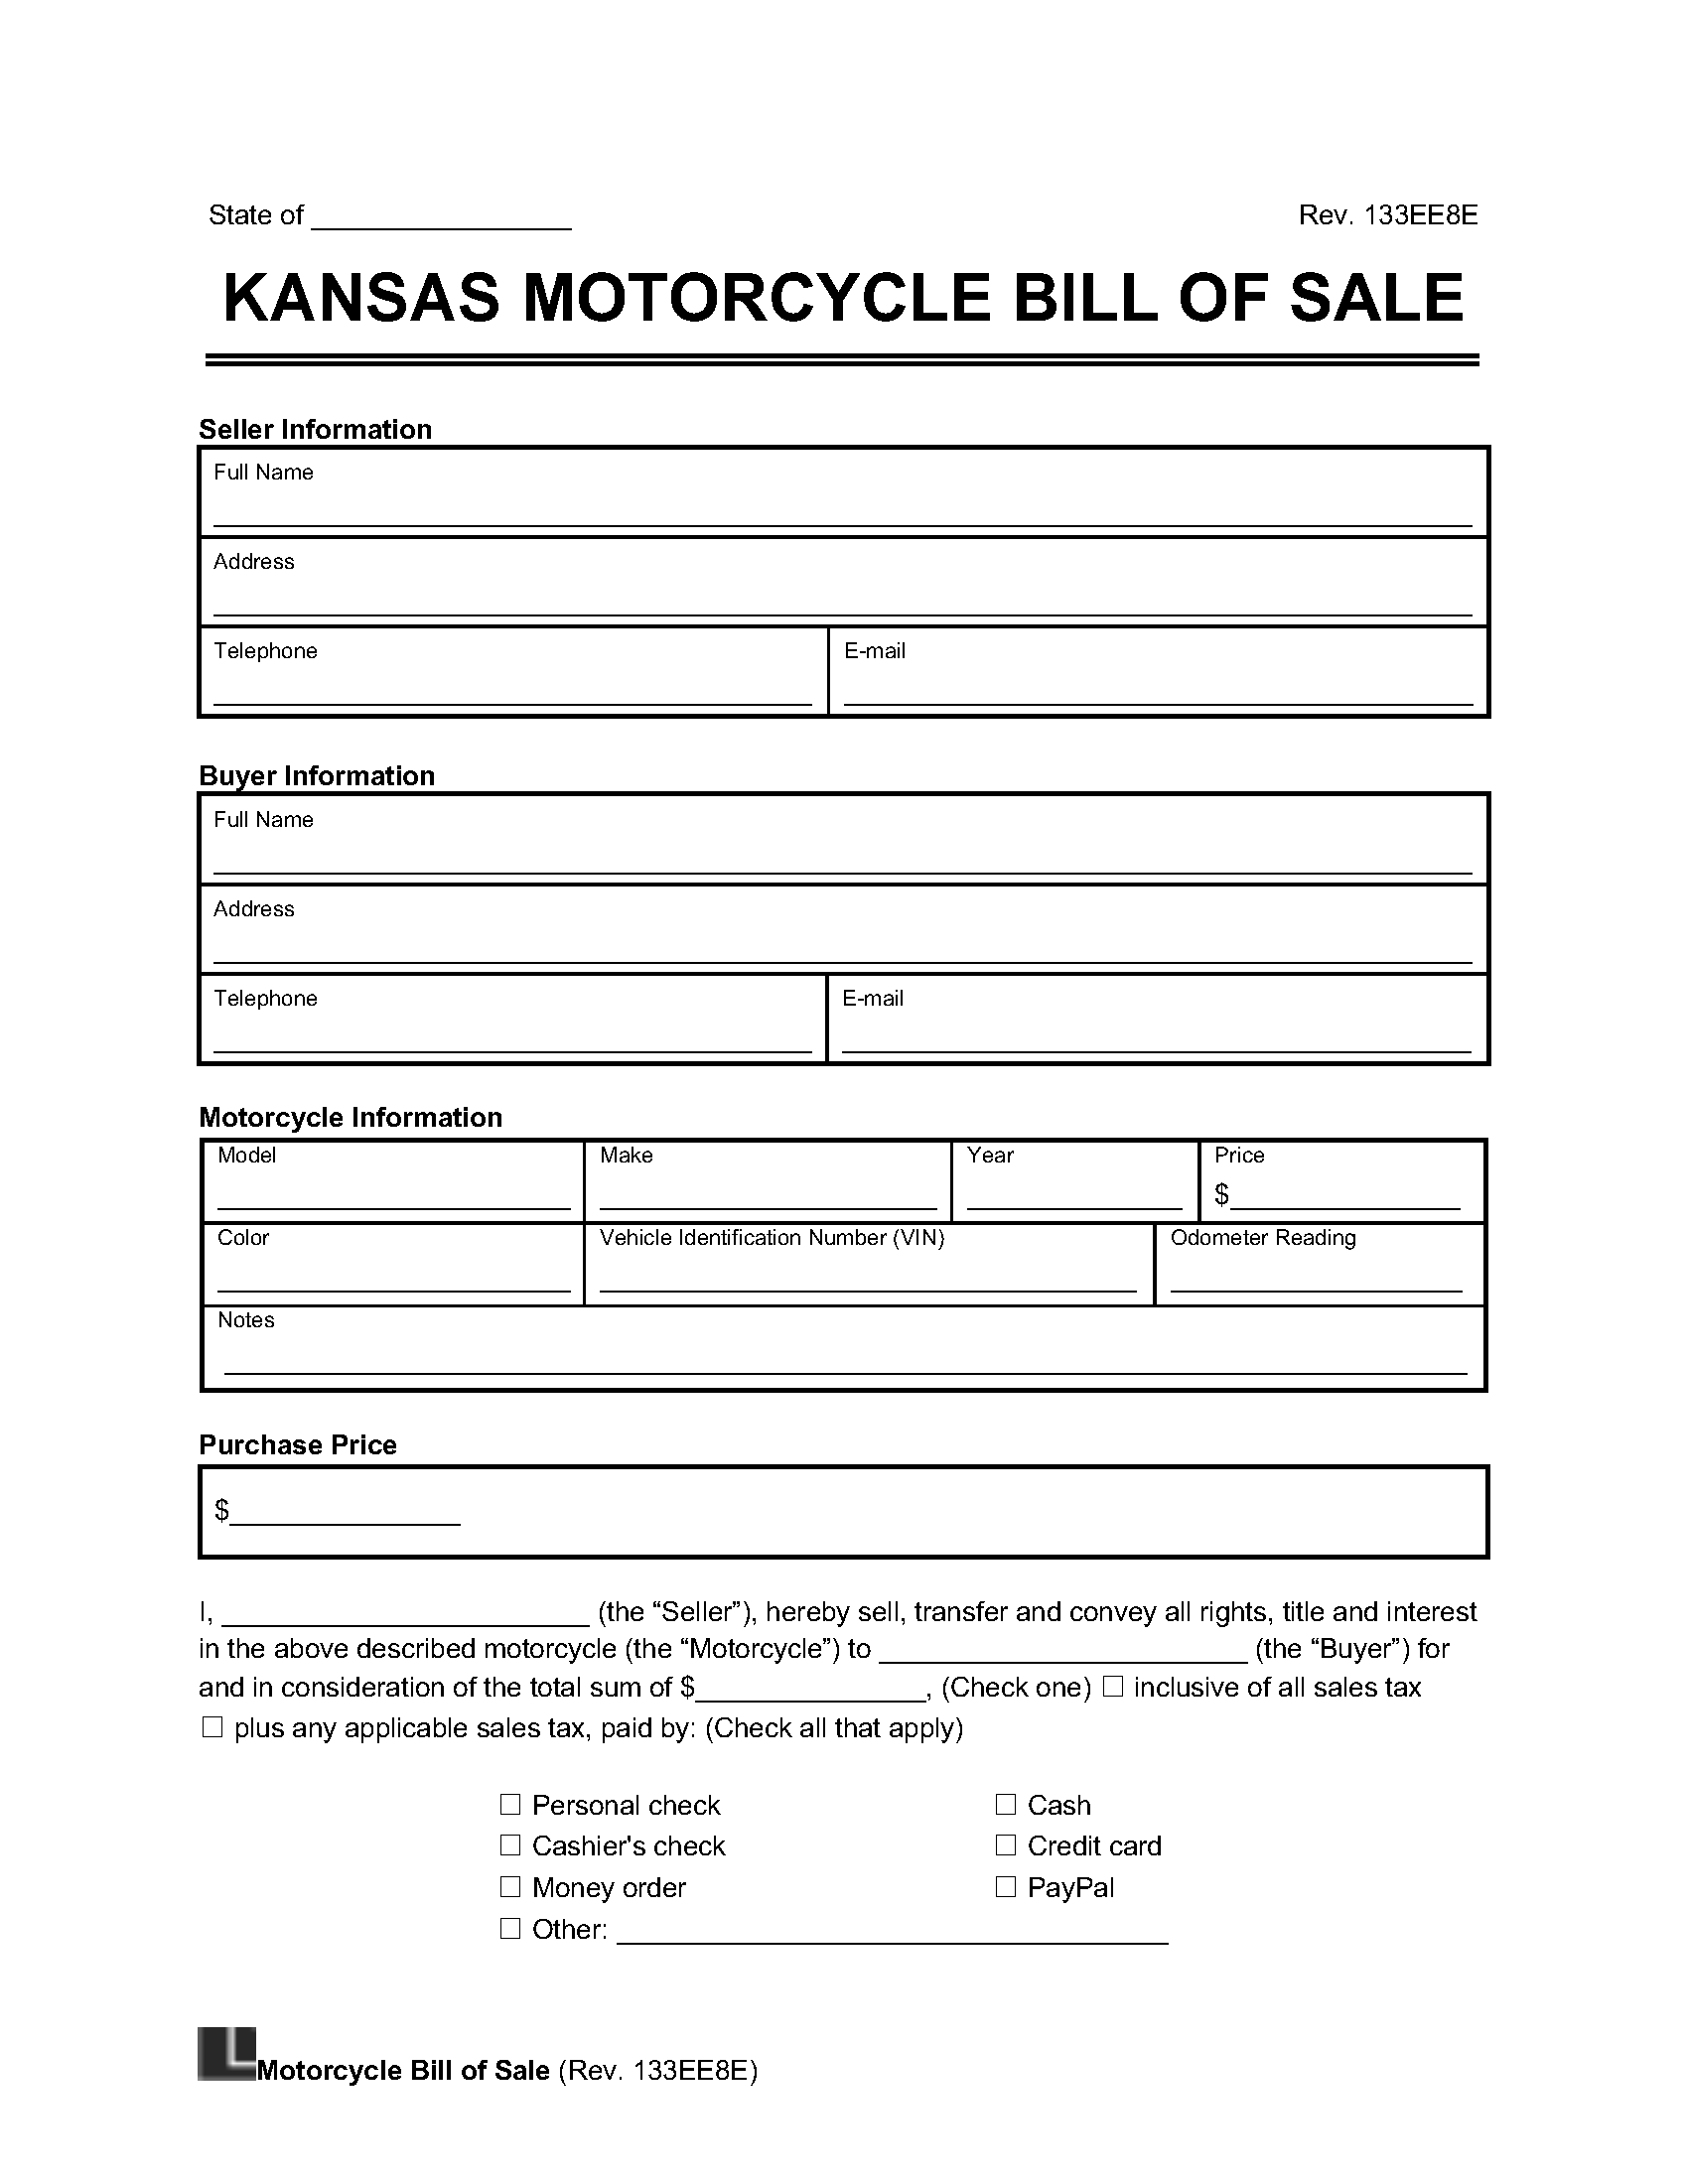 kansas motorcycle bill of sale